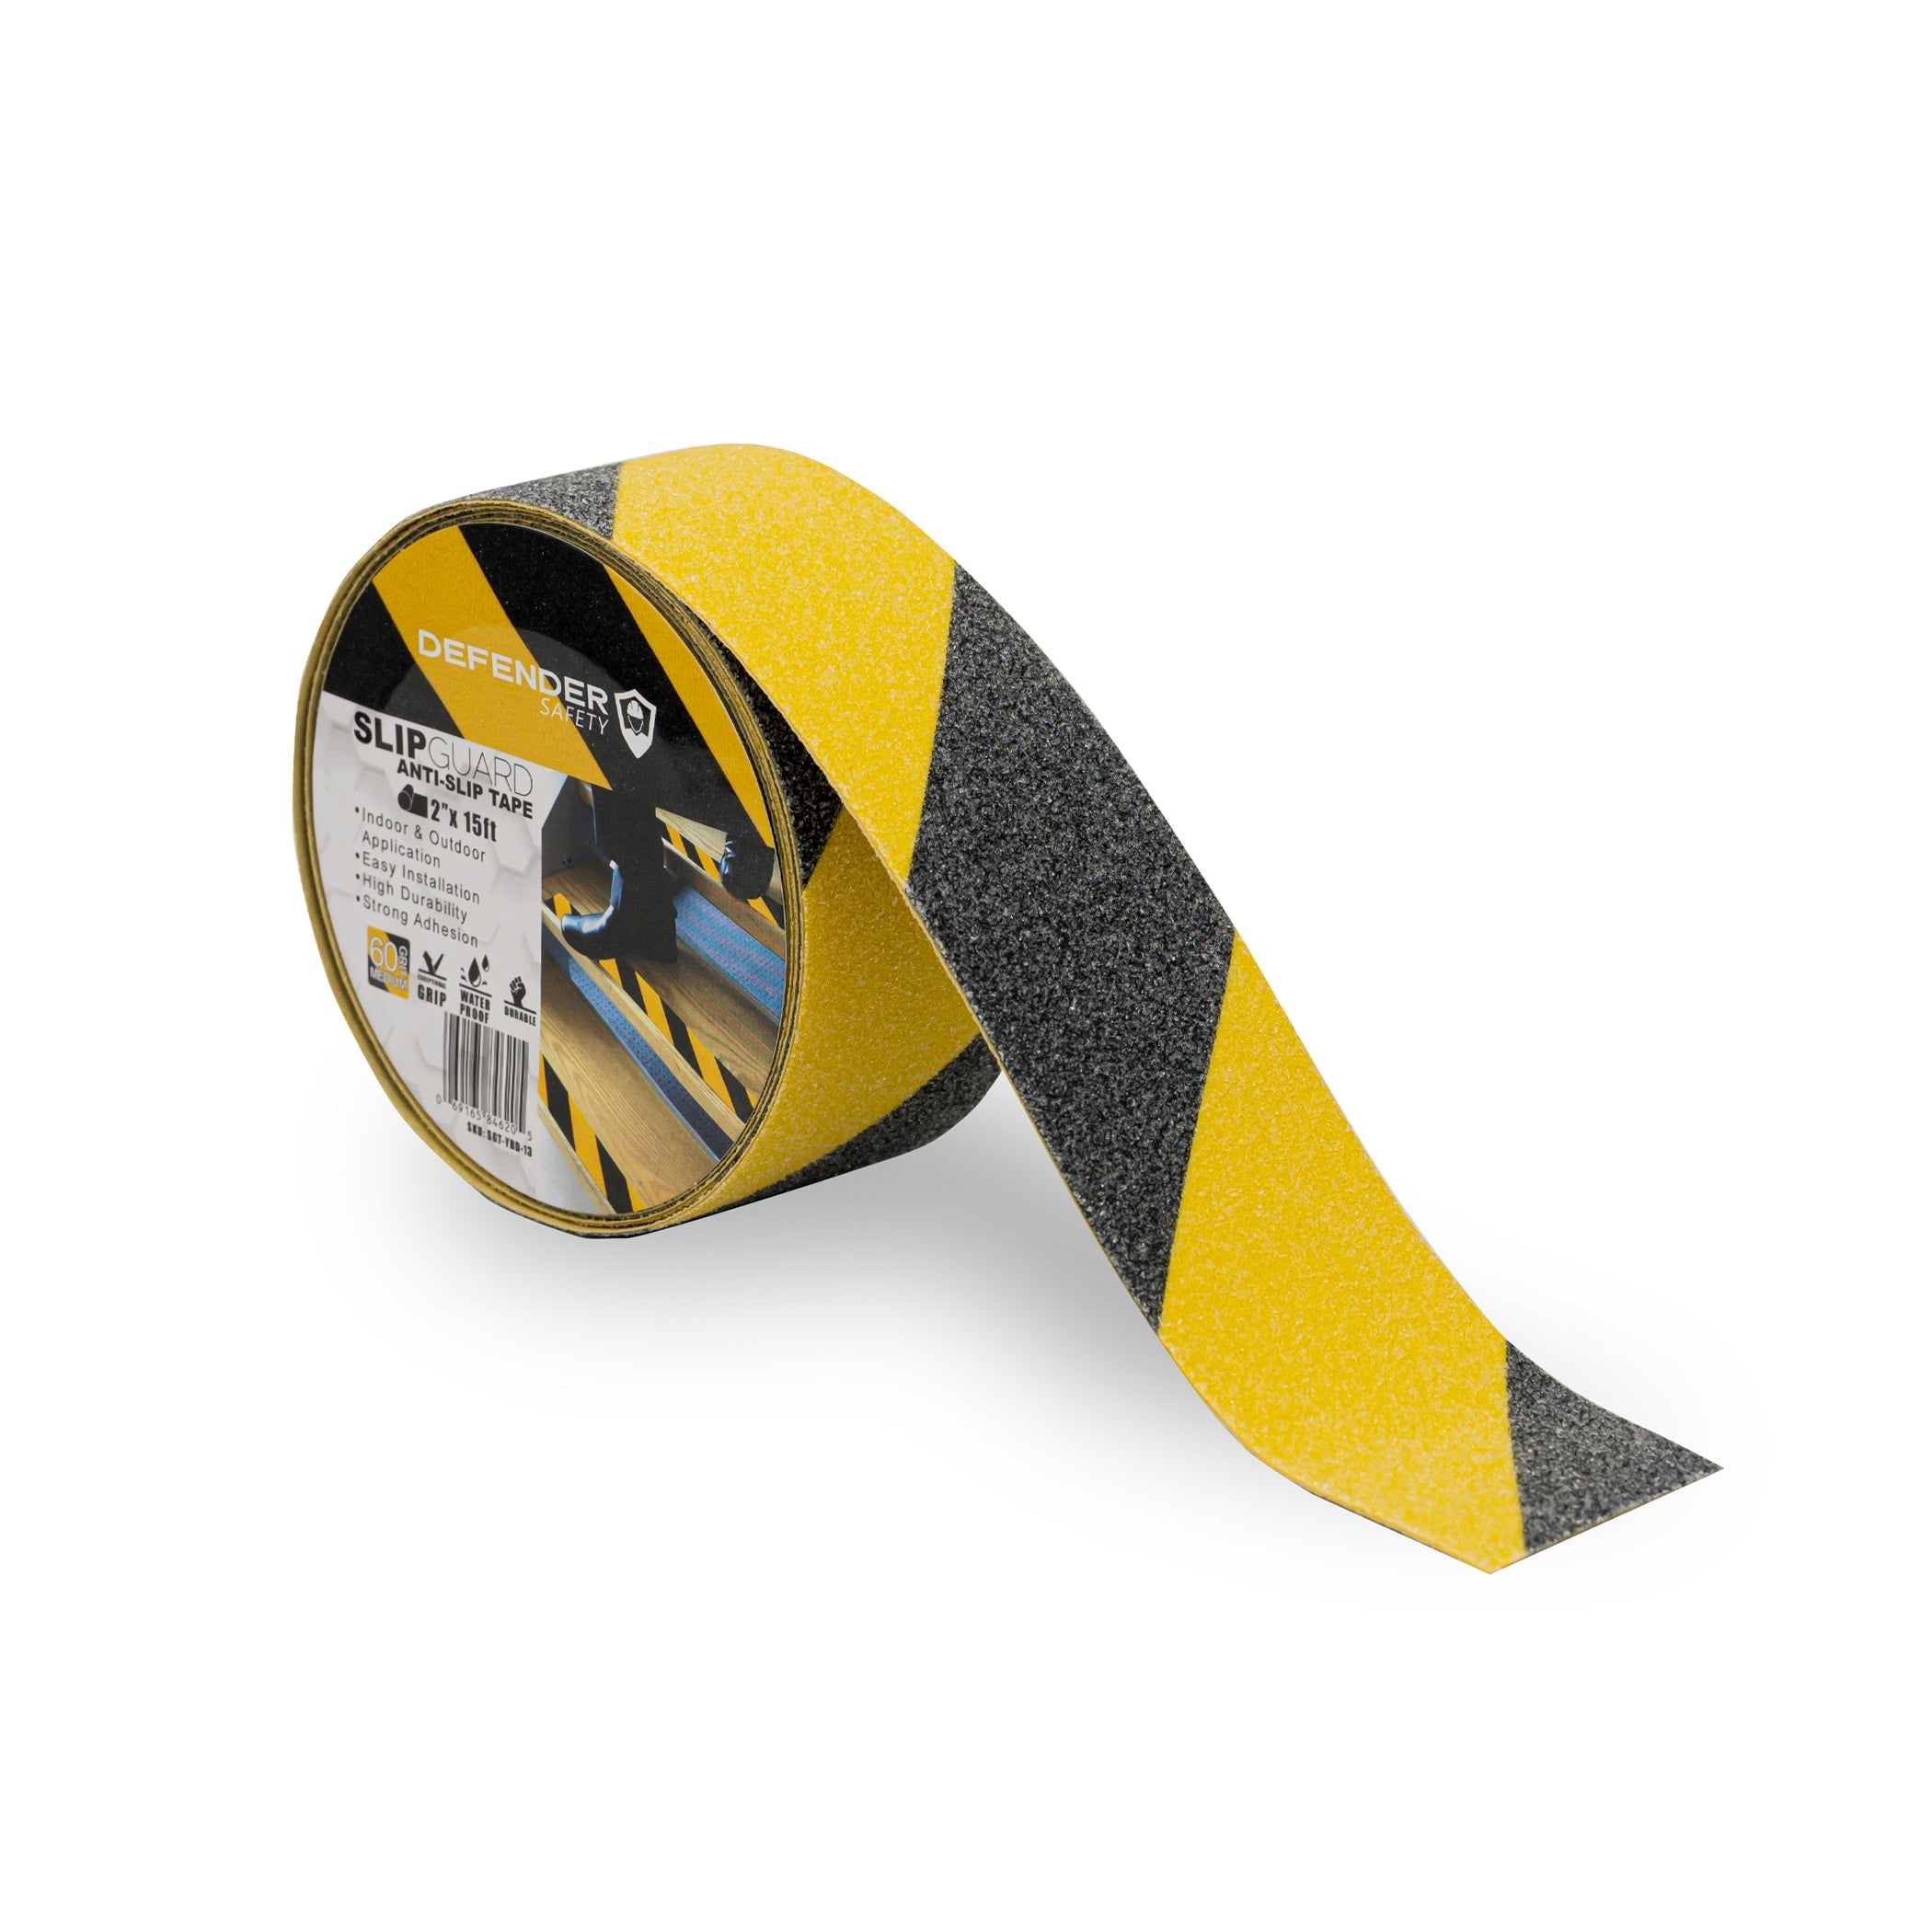 SLIPGUARD™ Anti-Slip Floor Tape. 60 Grit. Yellow & Black - Defender Safety